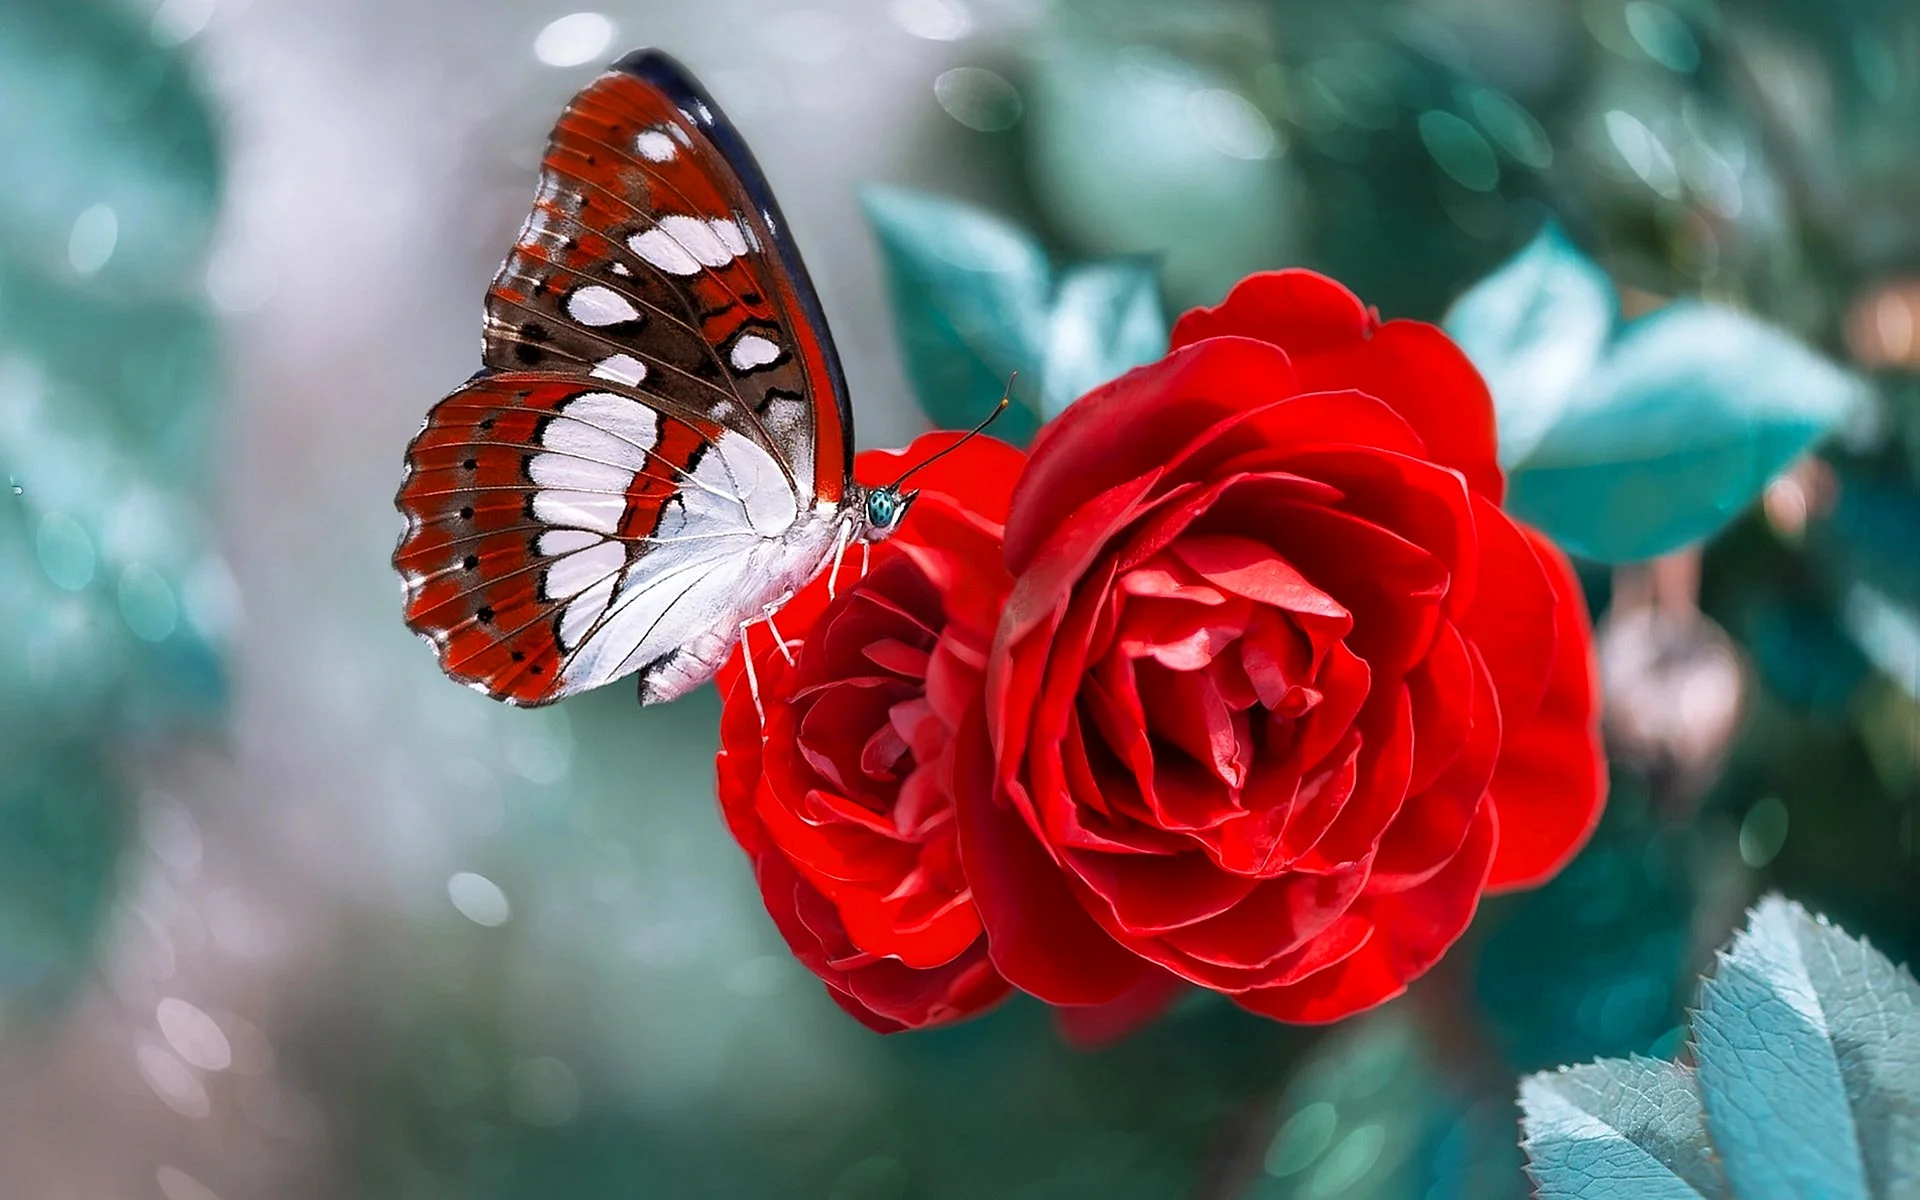 Rose Butterfly Wallpaper